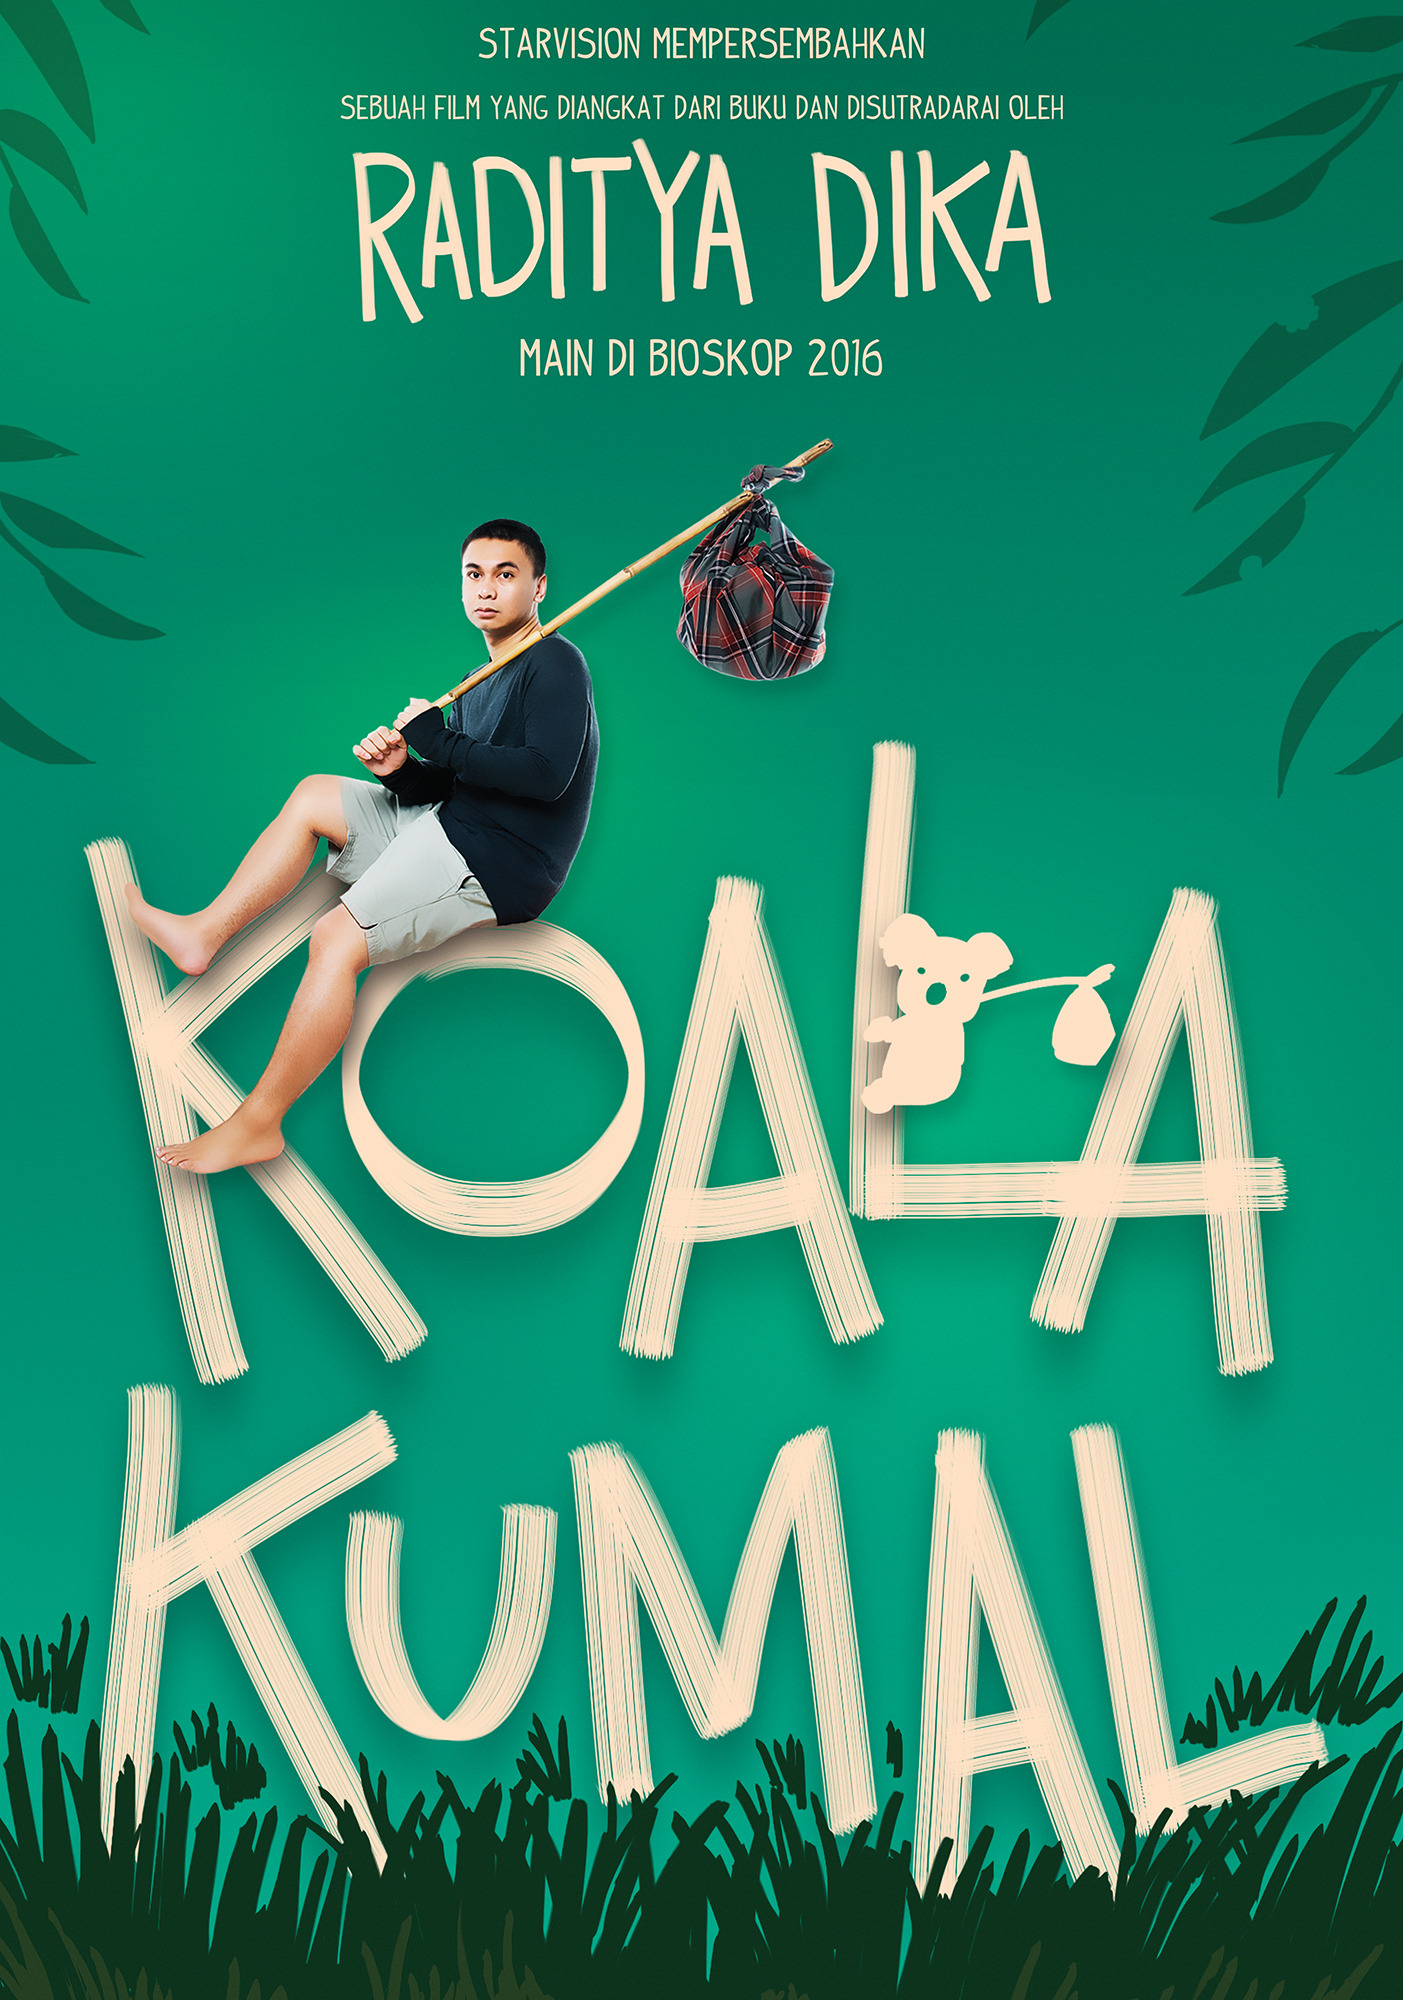 Mega Sized Movie Poster Image for Koala Kumal (#2 of 3)